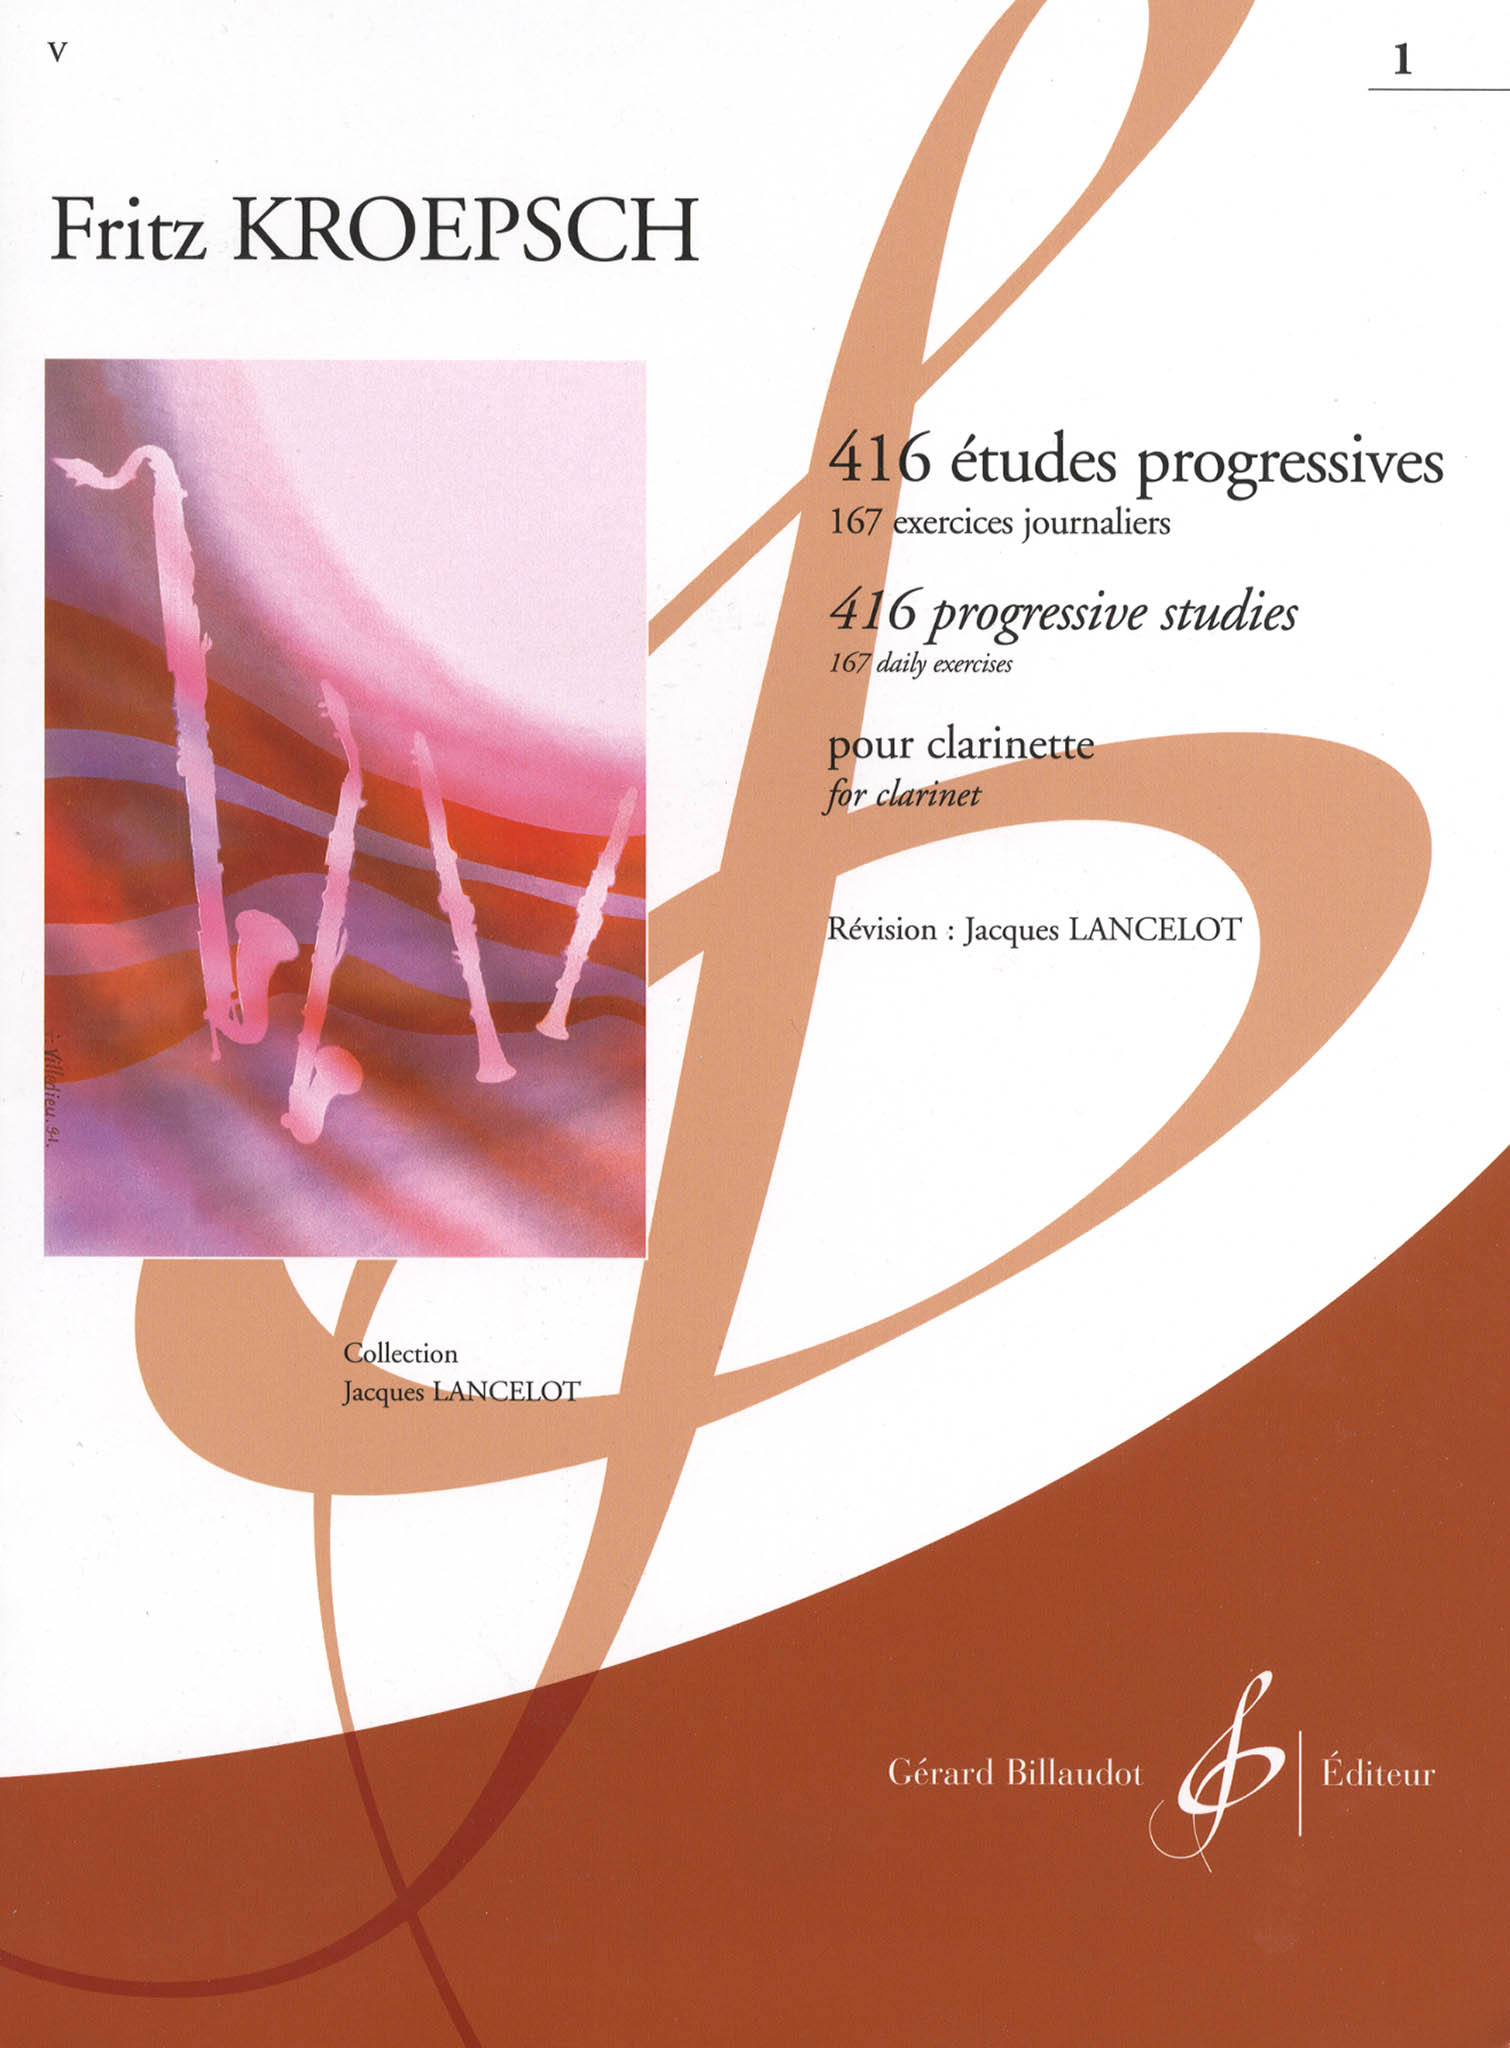 416 Progressive Studies for Clarinet, Book 1 Cover